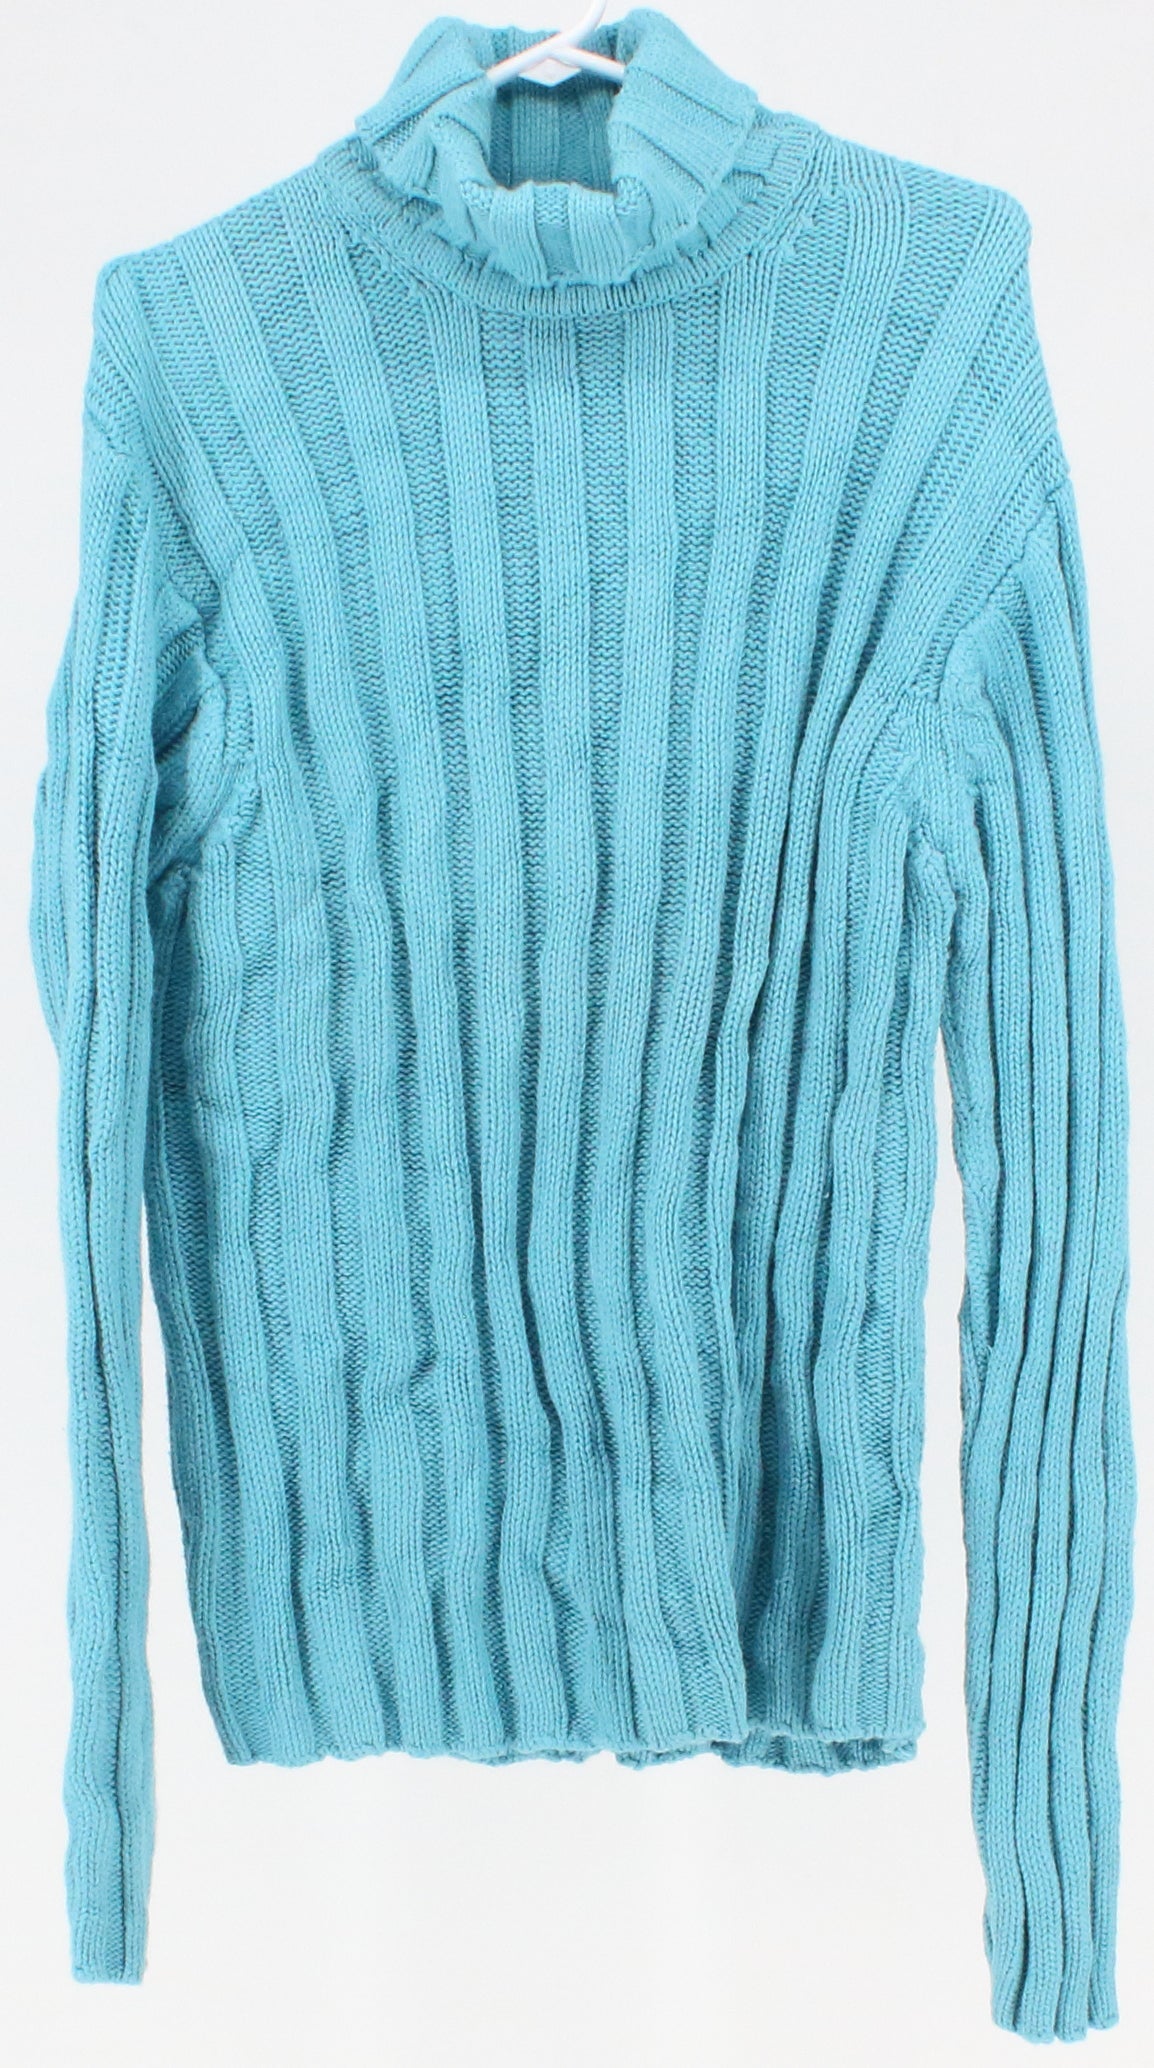 Gap Turquoise Turtleneck Women's Sweater